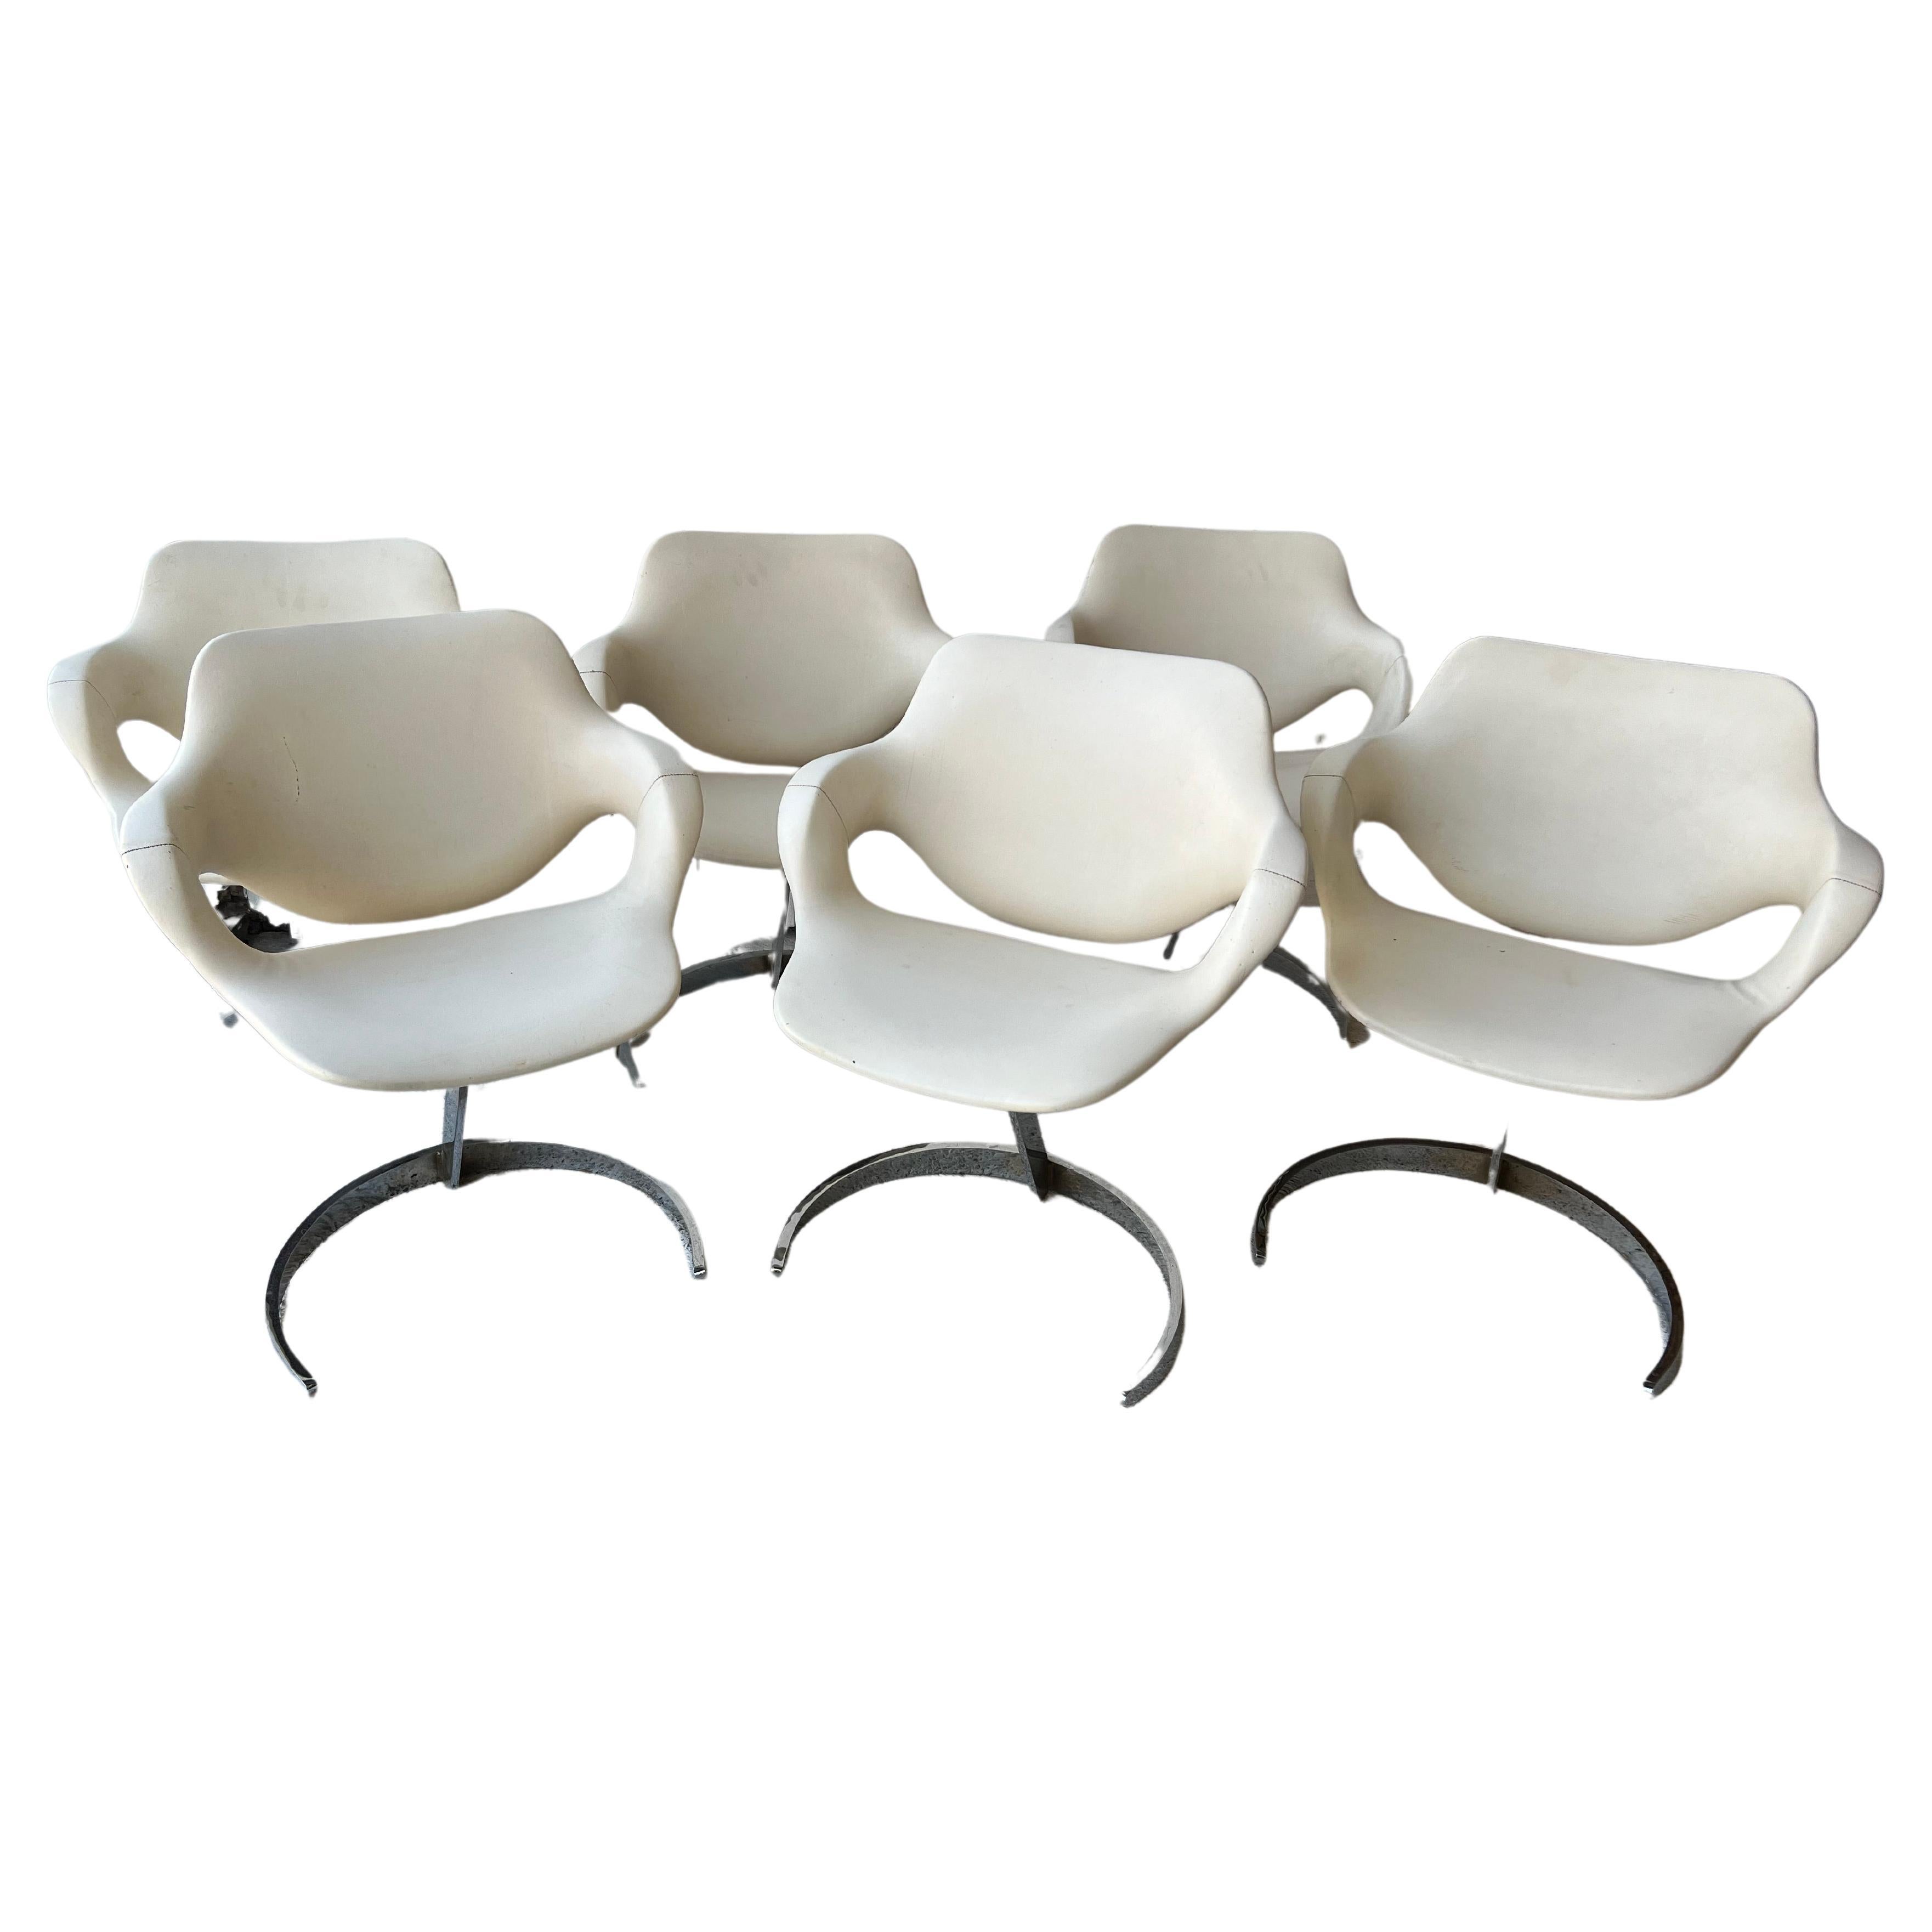 Boris Tabacoff Dining Room Chairs